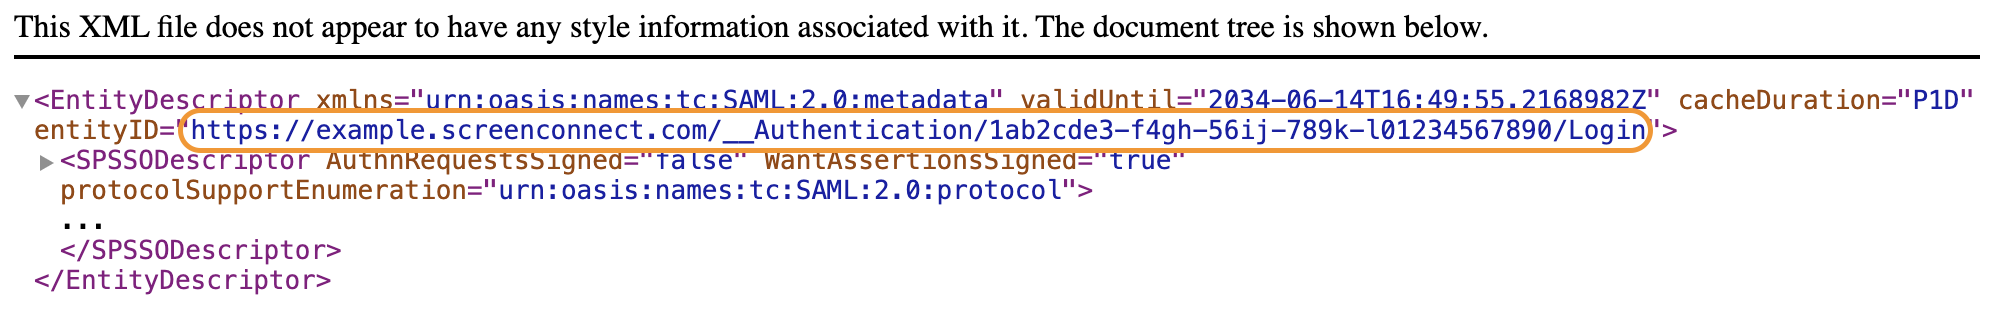 ConnectWise ScreenConnect XML Metadata File Entity ID